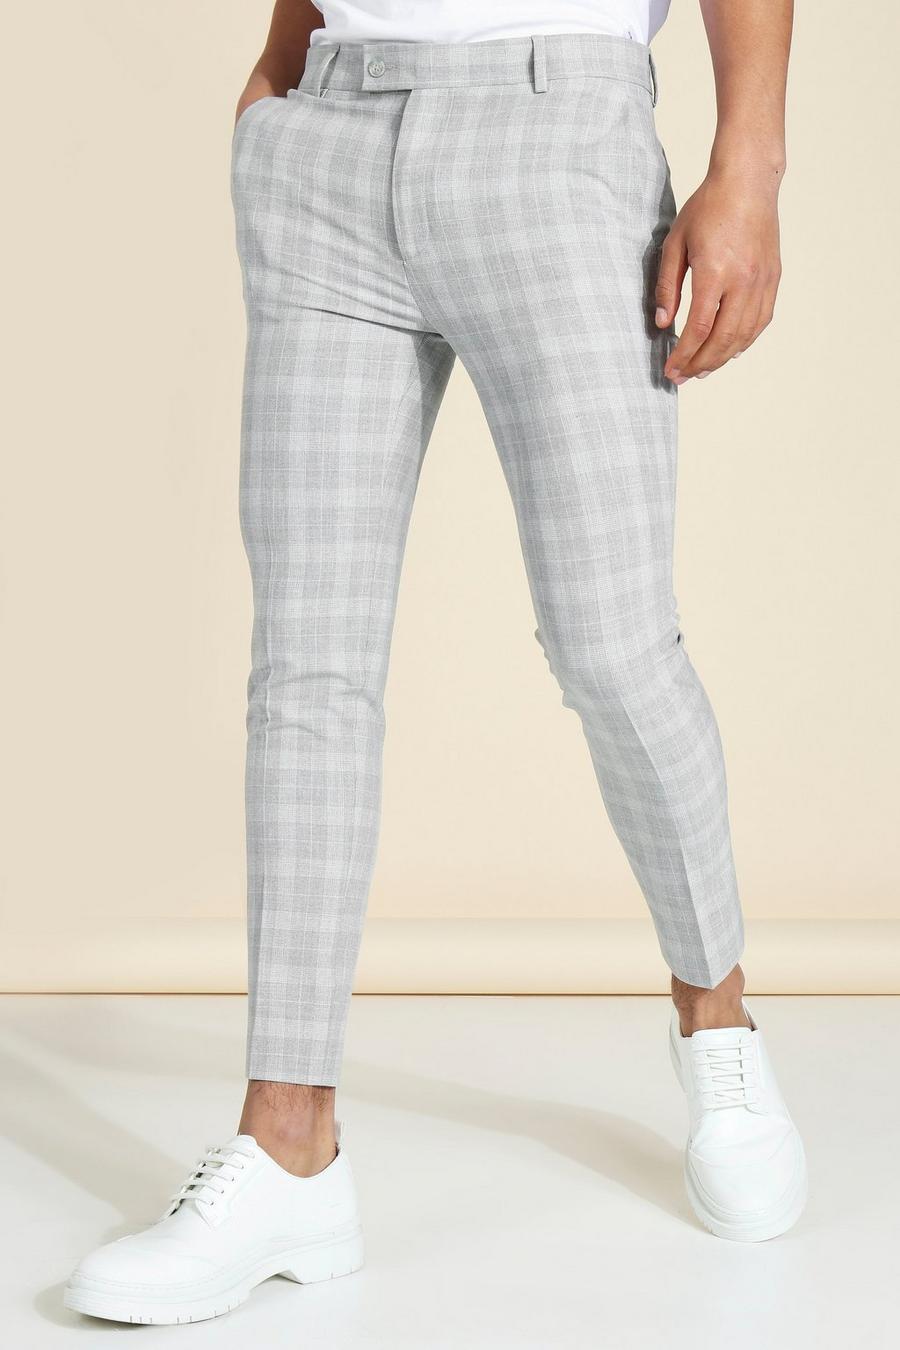 Pantaloni Capri sartoriali Super Skinny Fit a quadri, Grey